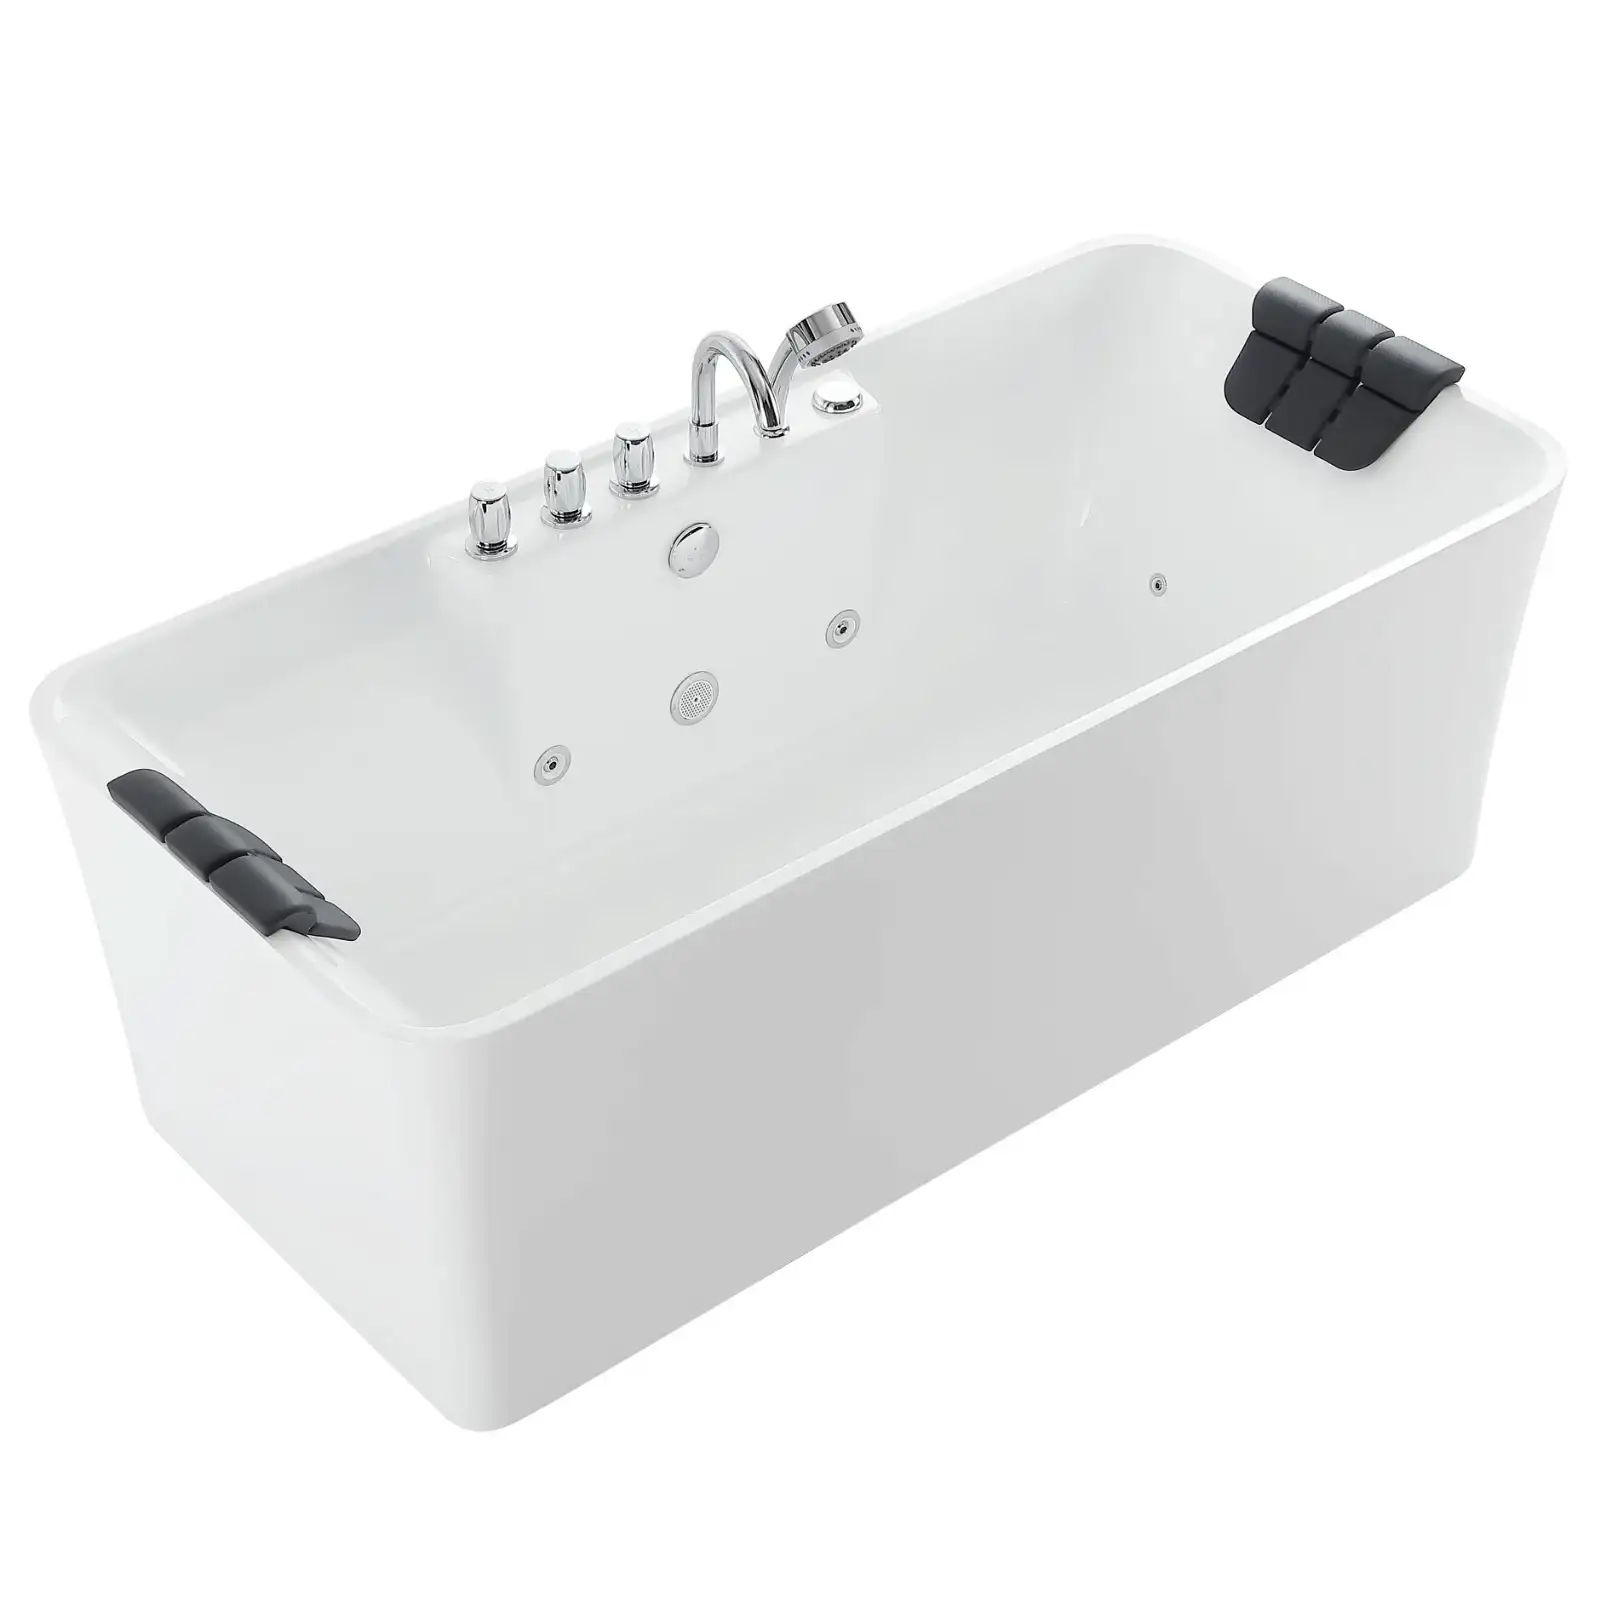 Image of Empava 67 in. Whirlpool Freestanding Acrylic Bathtub - EMPV-67AIS16